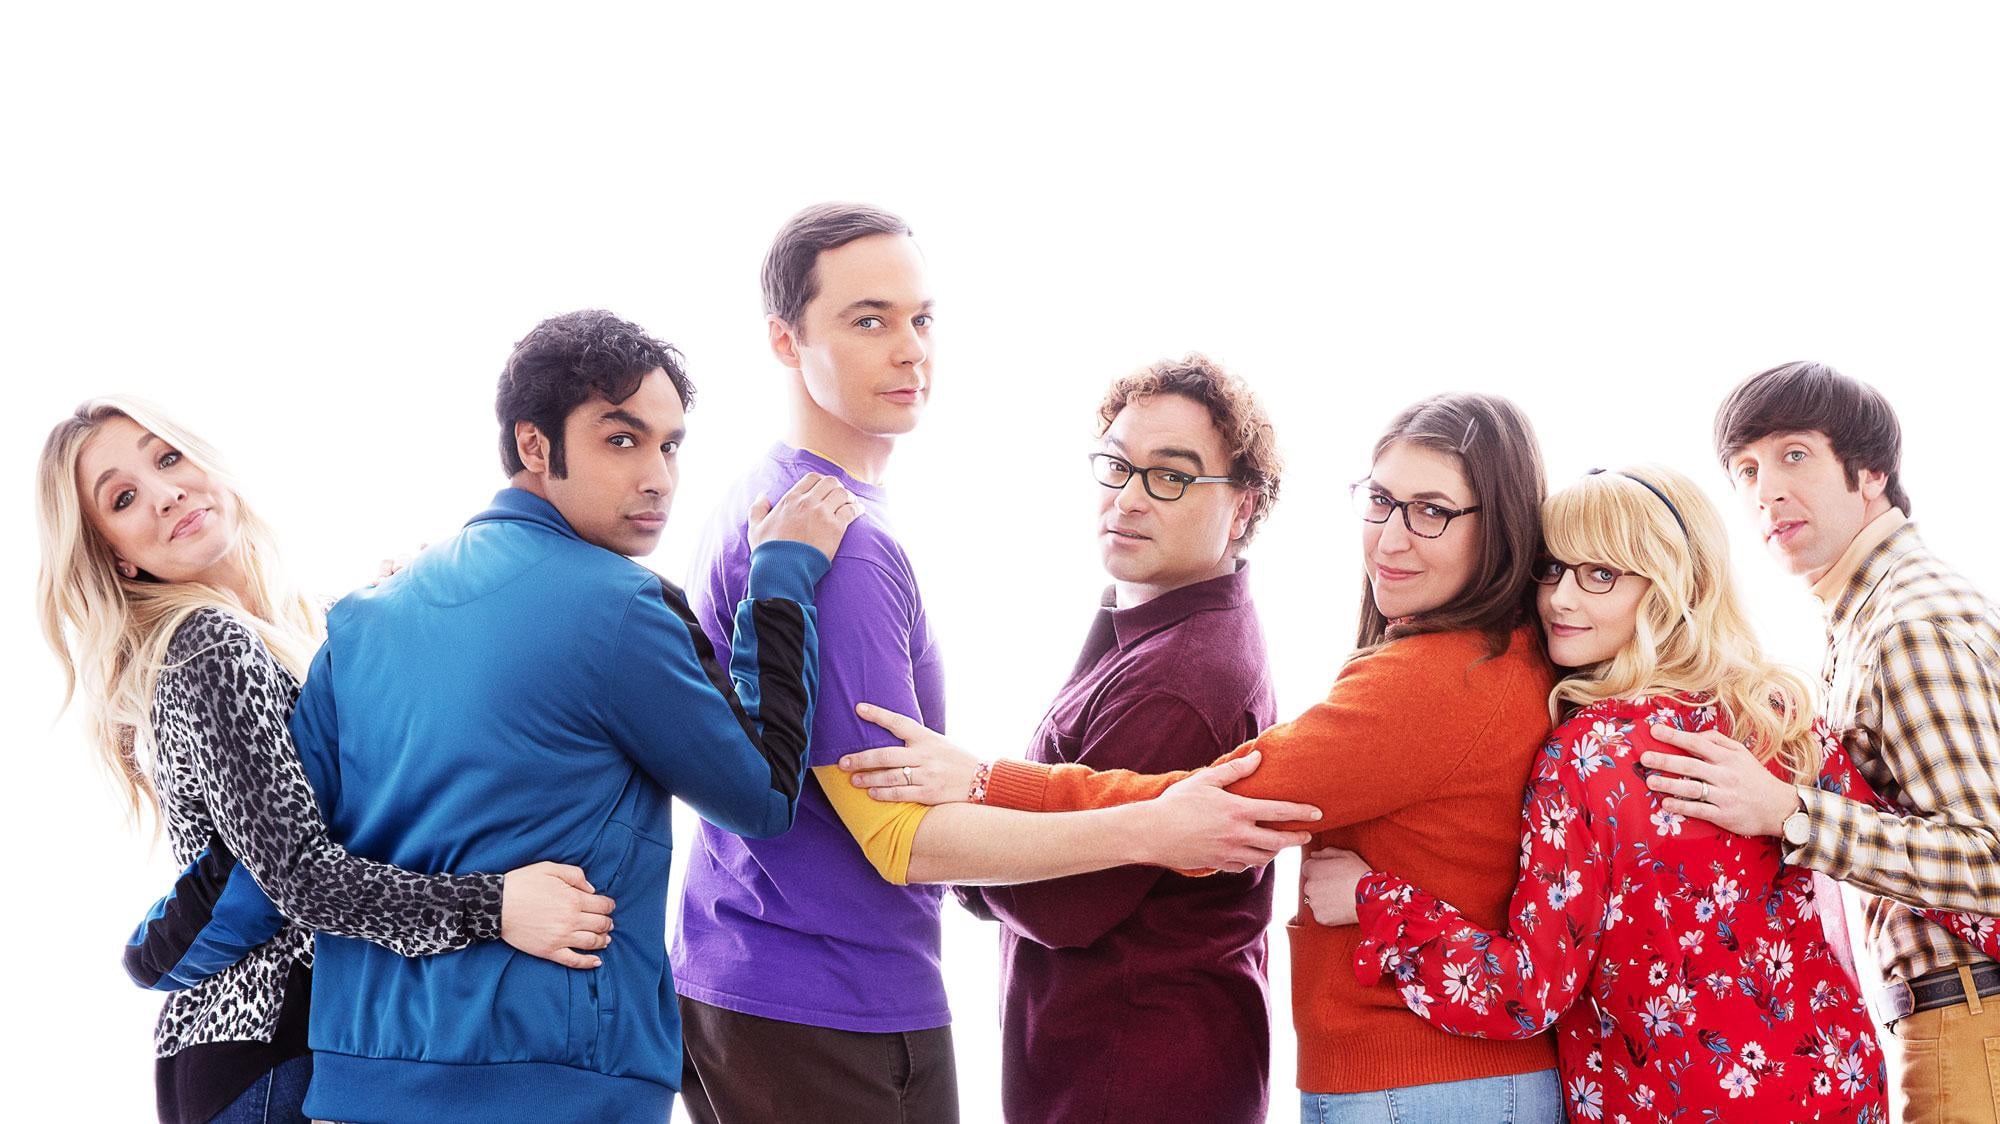 The Big Bang Theory - Staffel 10